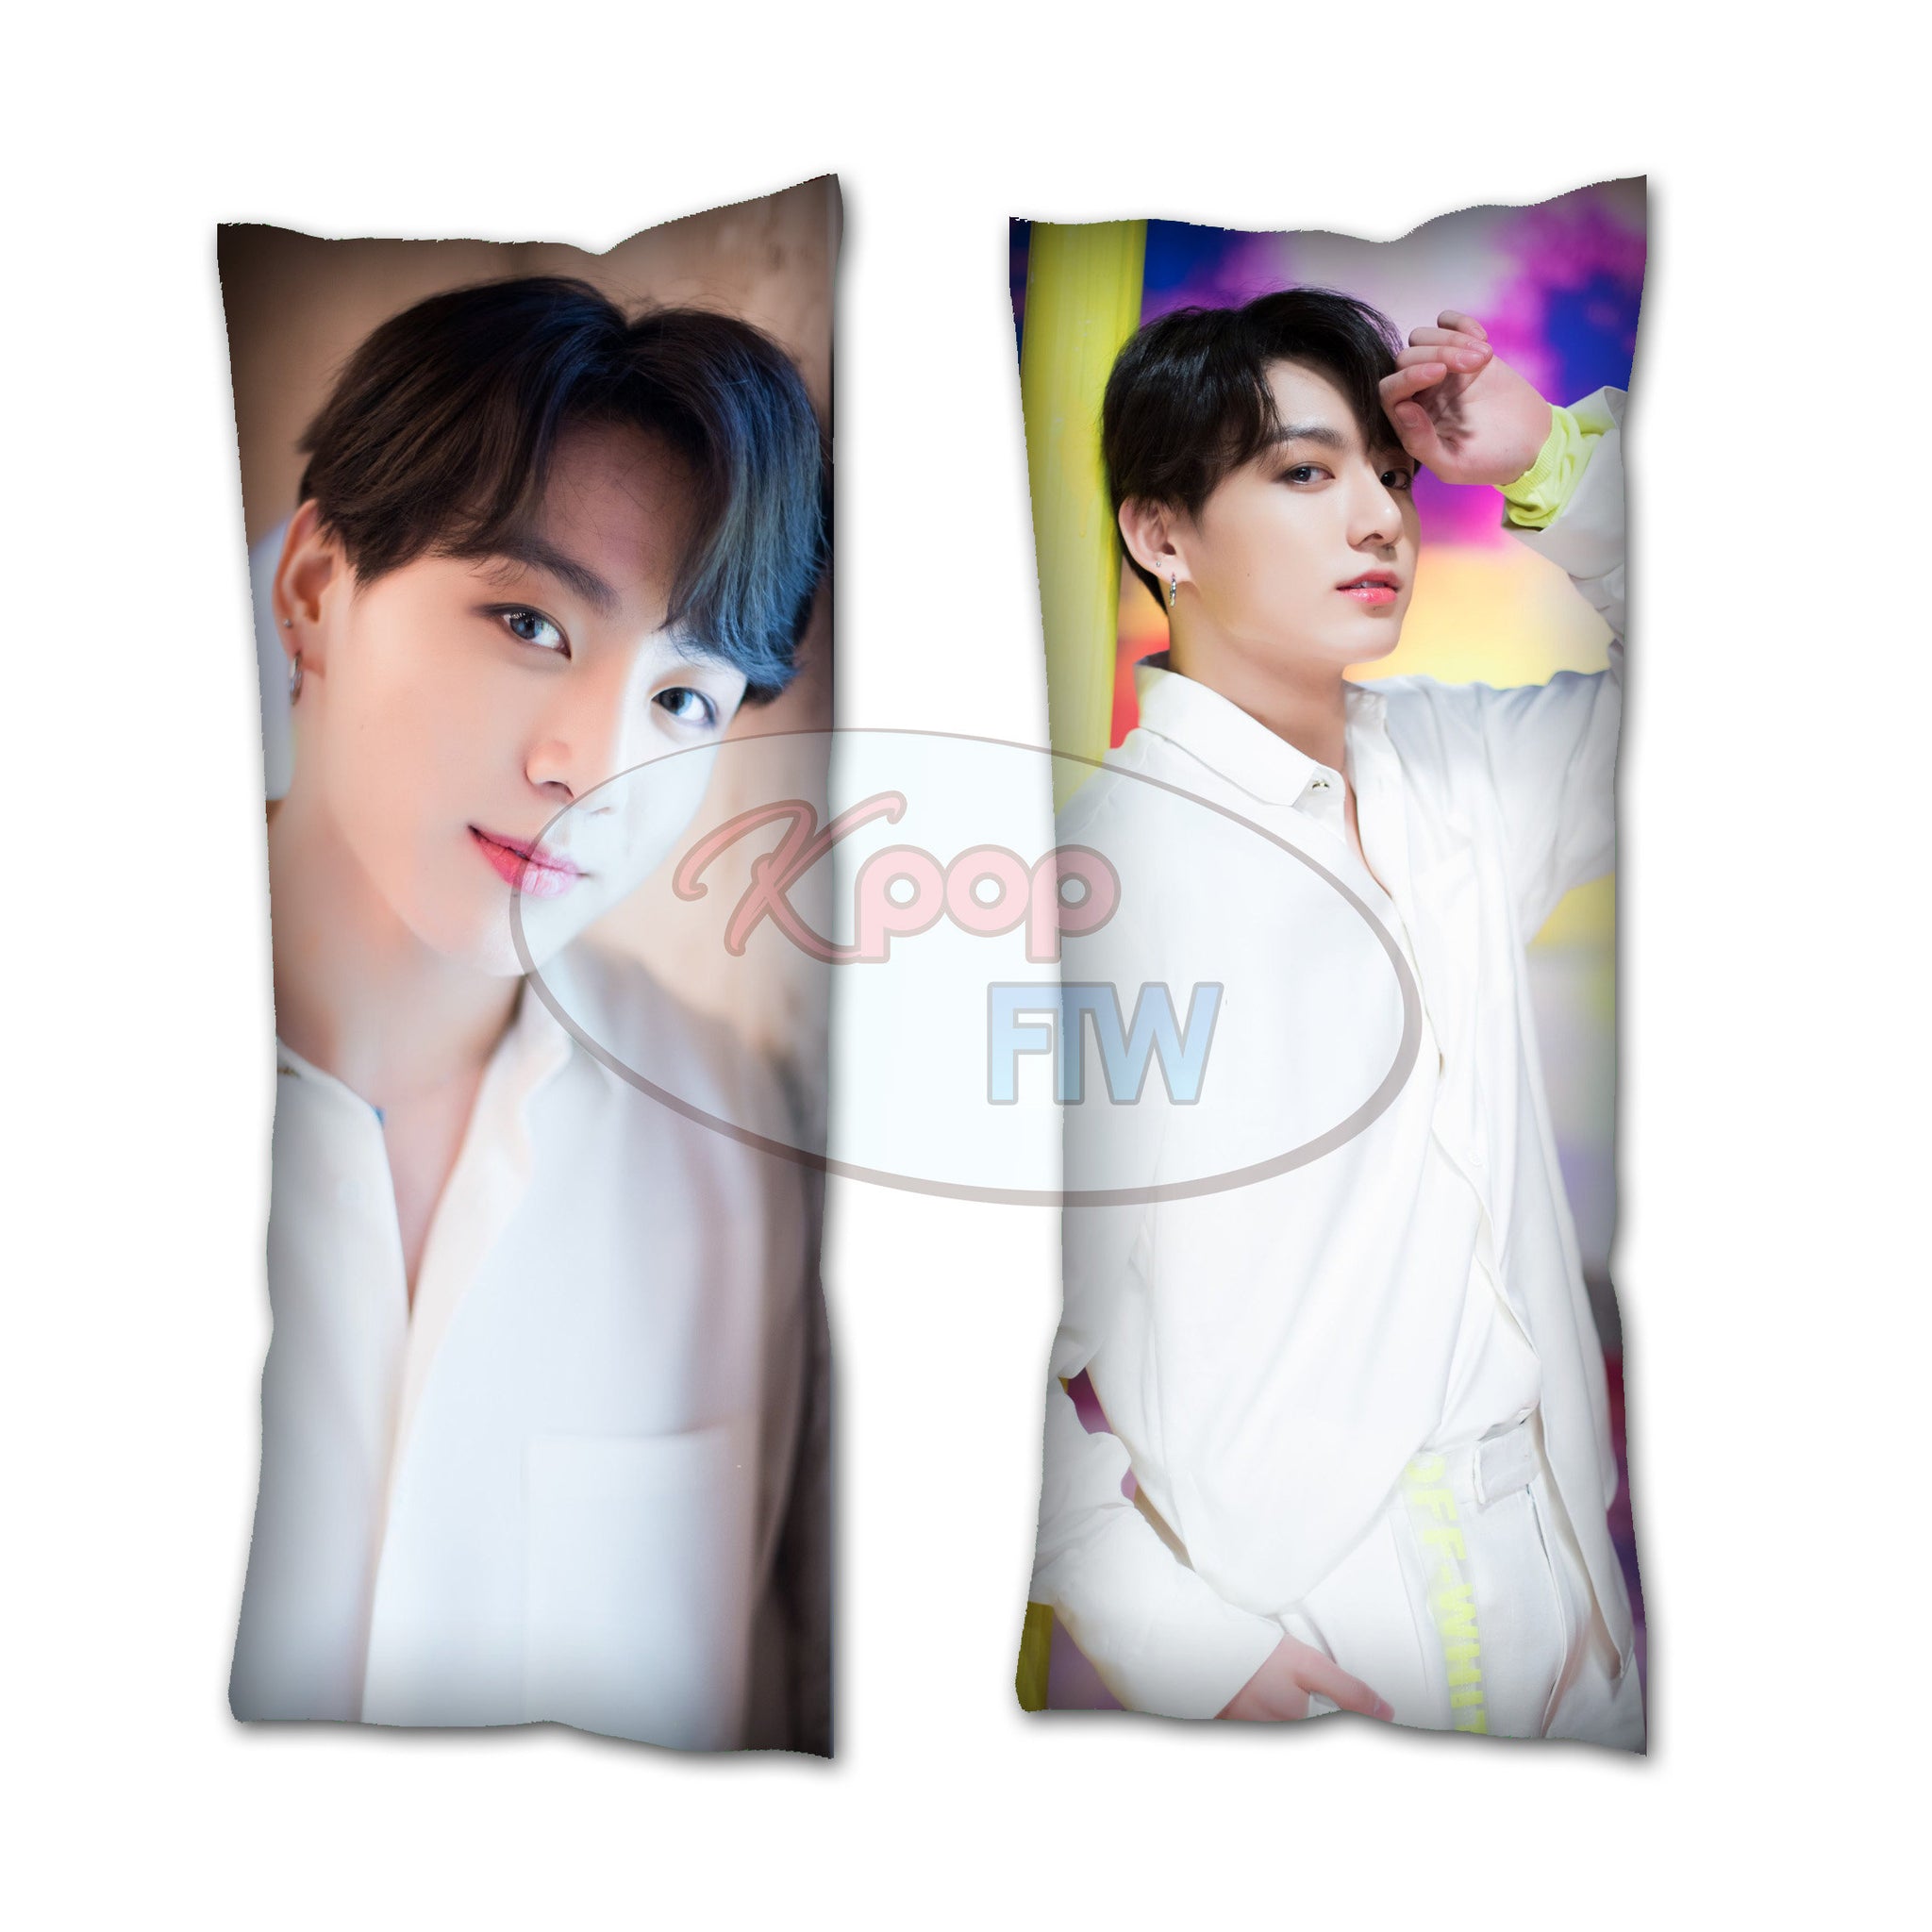 BTS] BMA Jungkook Body Pillow - Kpop FTW